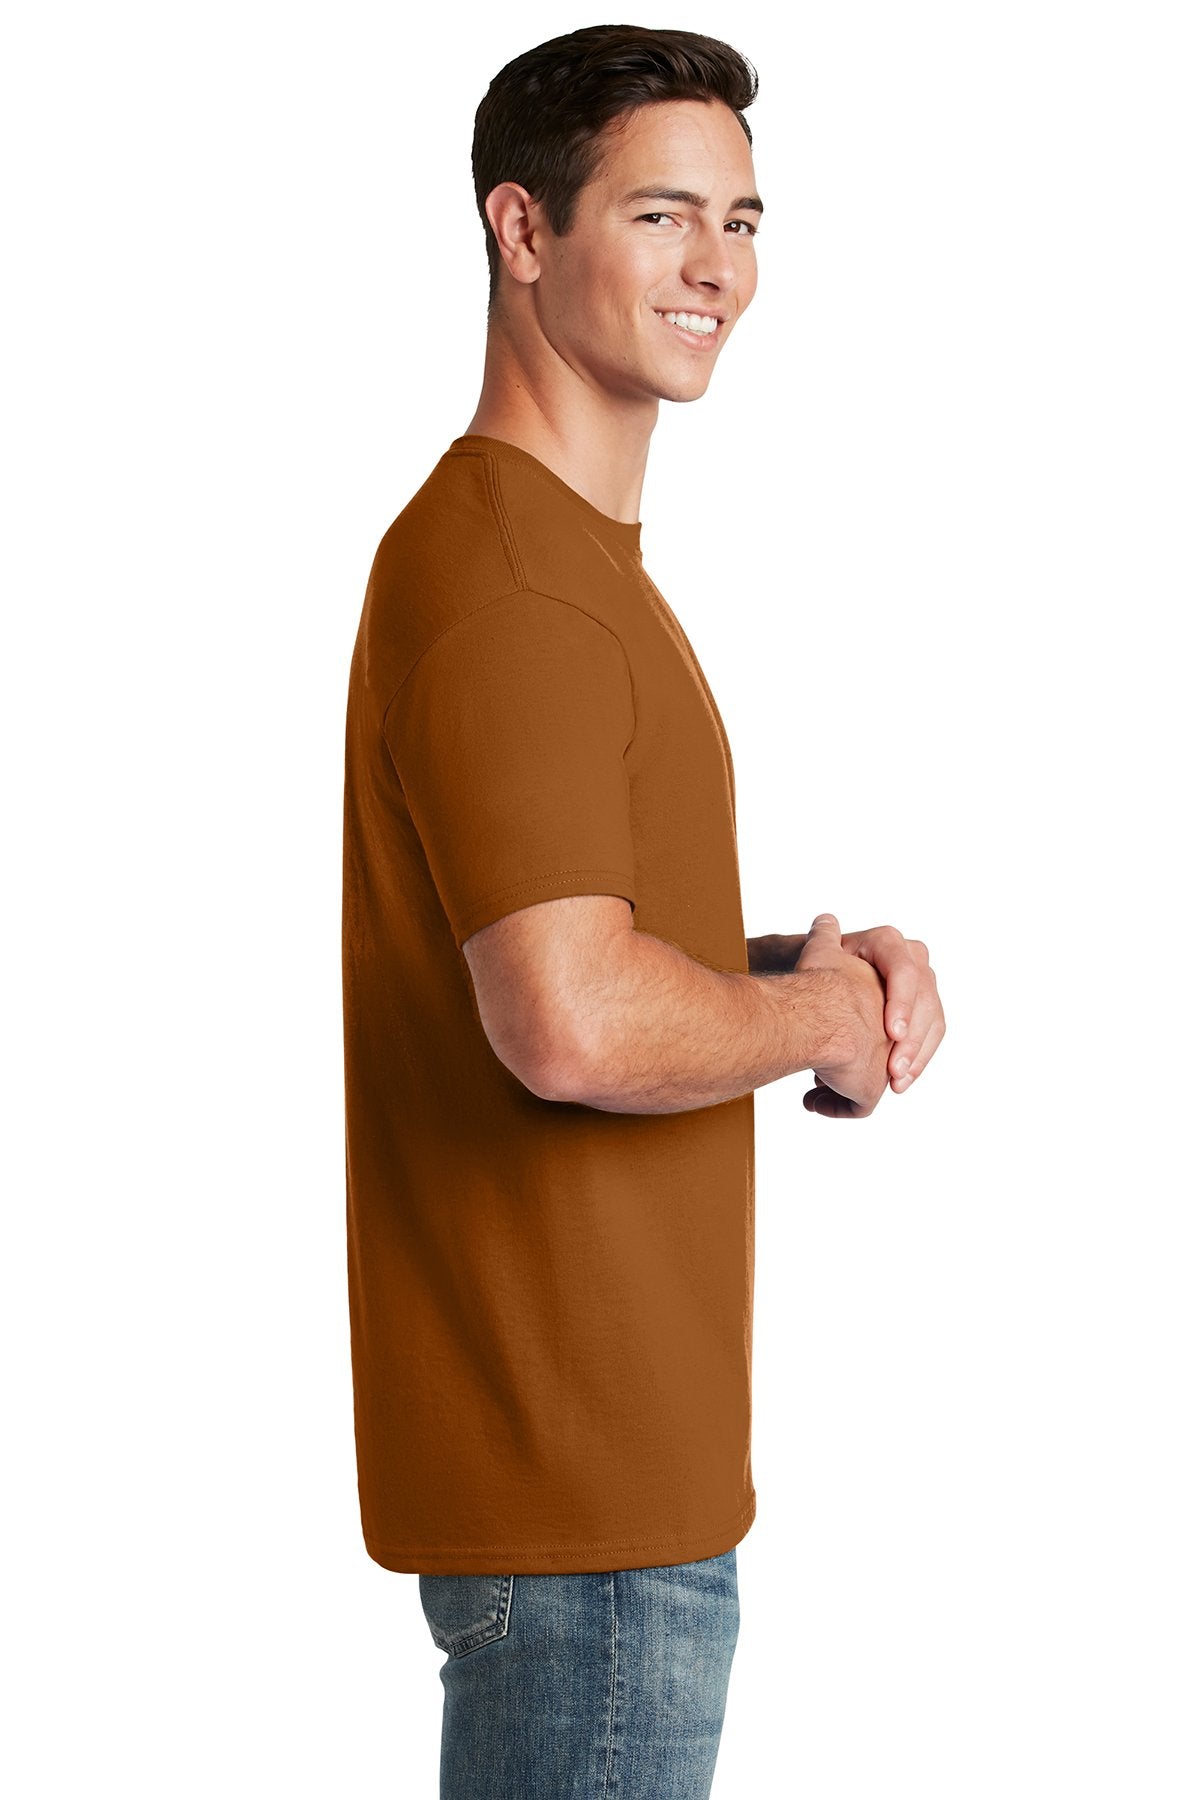 Jerzees Dri-Power Active 50/50 Cotton/Poly T-Shirt 29M Texas Orange